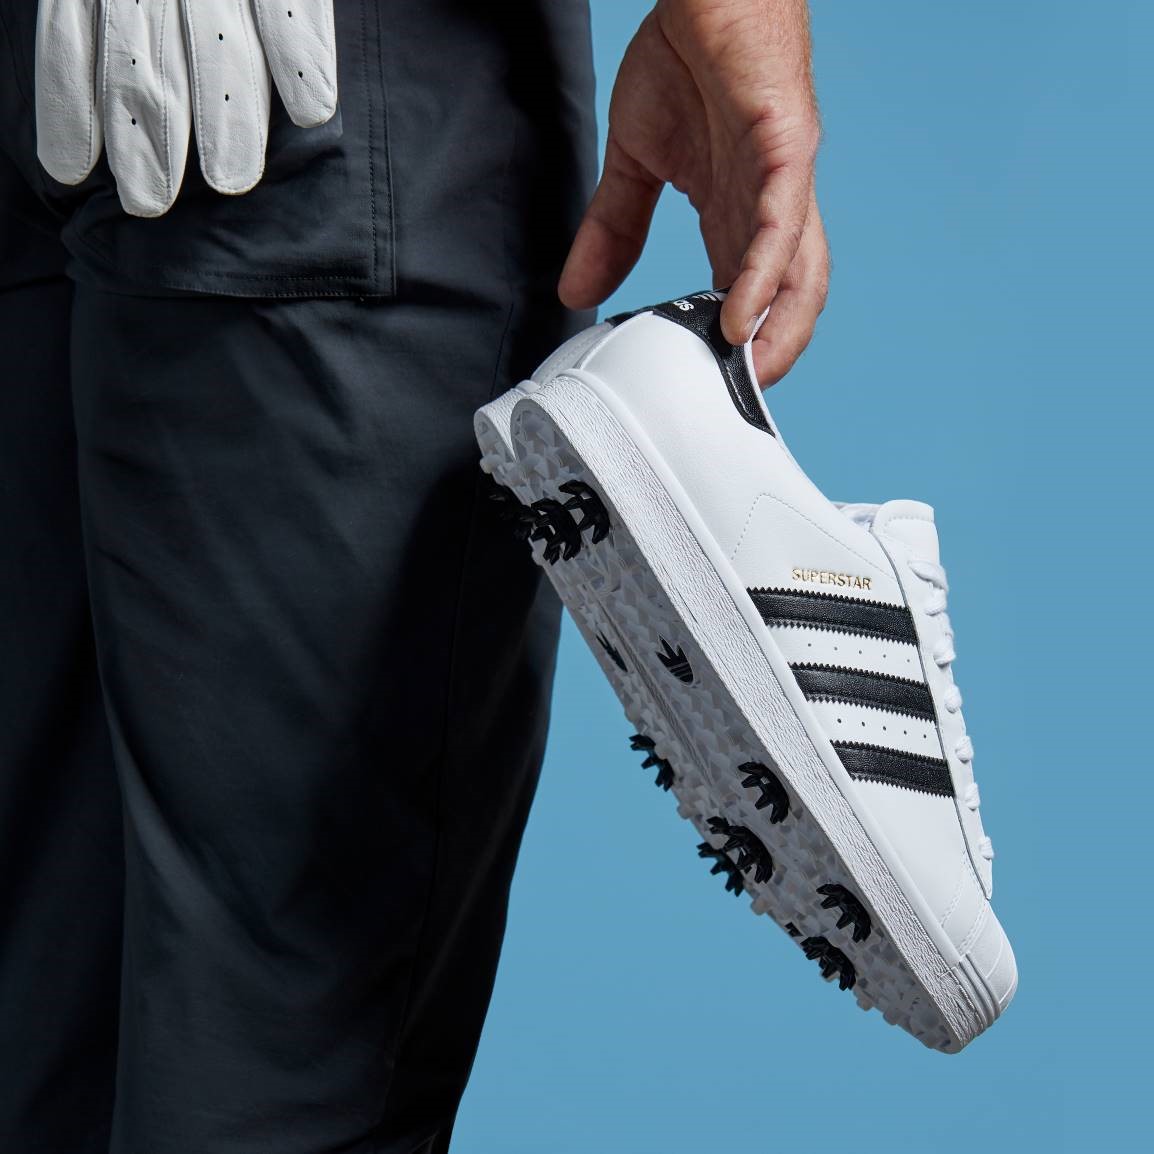 adidas Golf為Superstar鞋款帶來多變造型，於鞋底設計六顆防滑鞋釘與輔助突榫，以發揮專業高球鞋款性能。